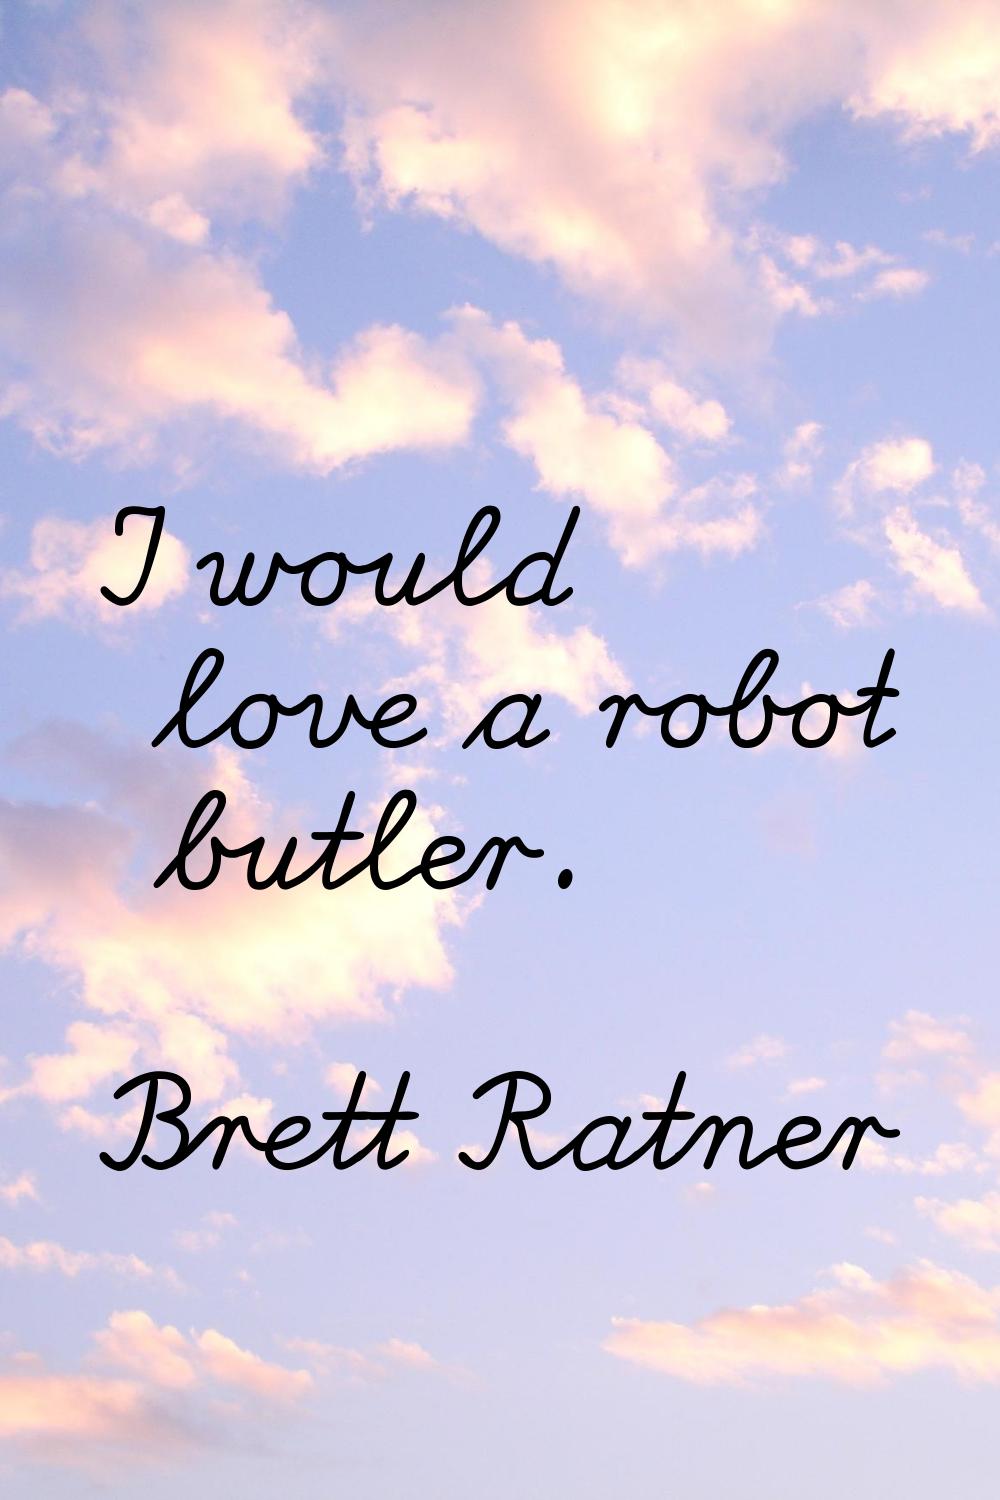 I would love a robot butler.